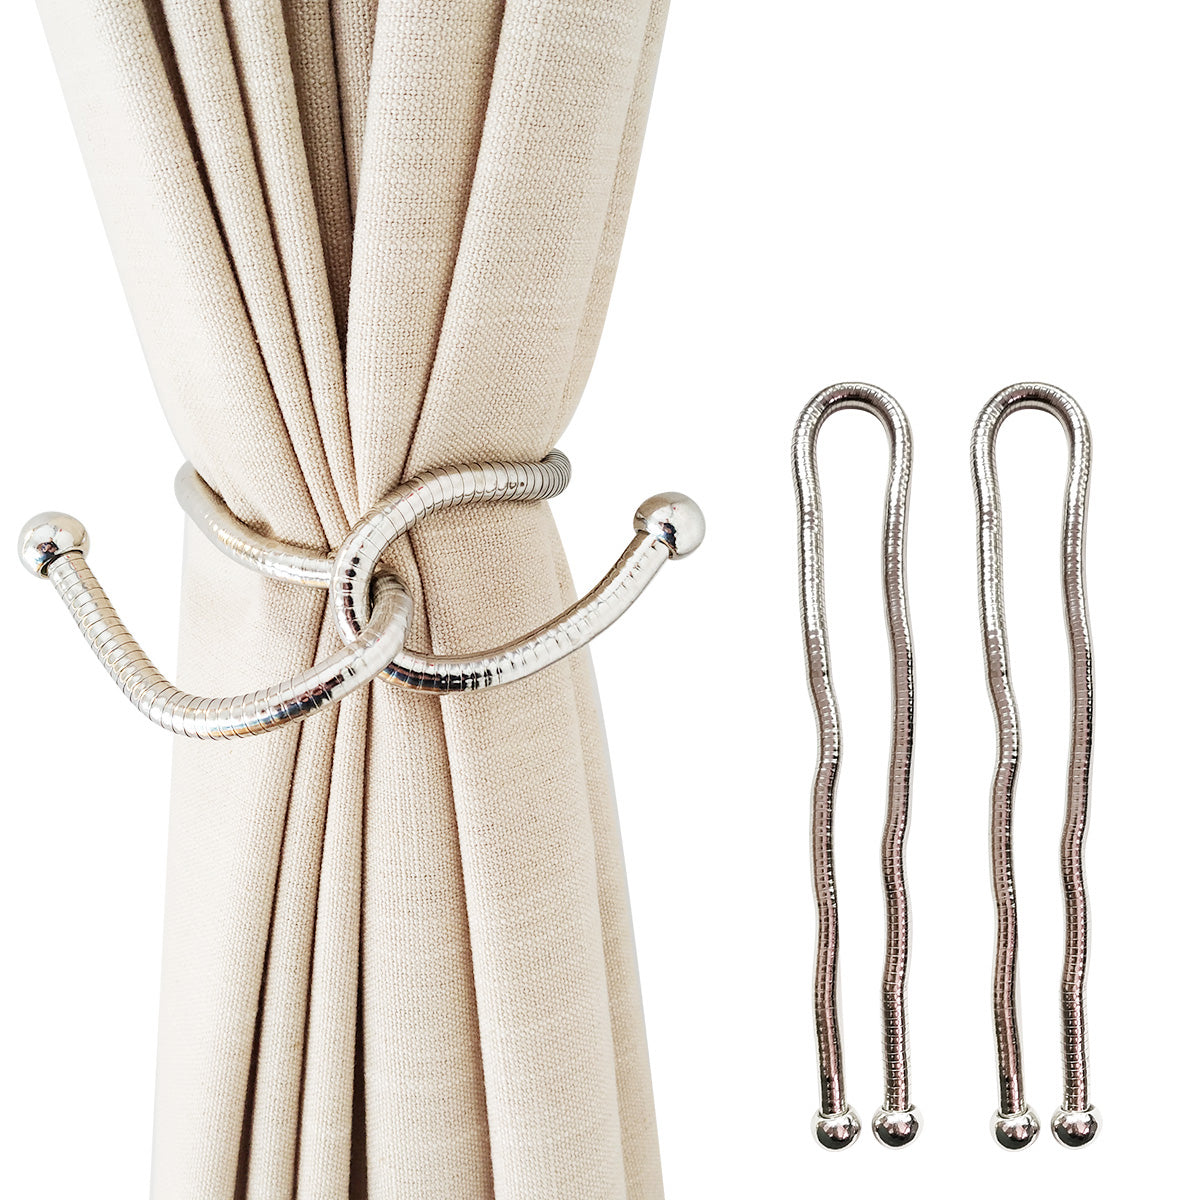 Decorative Drapes Curtain Twist Tiebacks